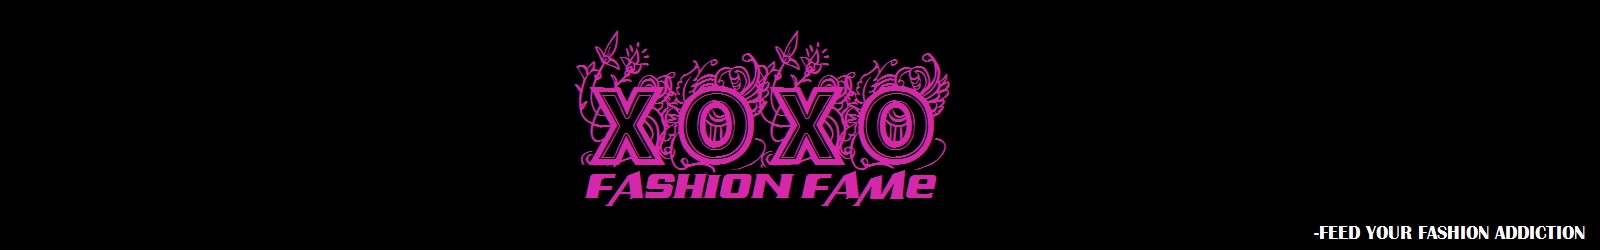 XOXO Fashion Fame